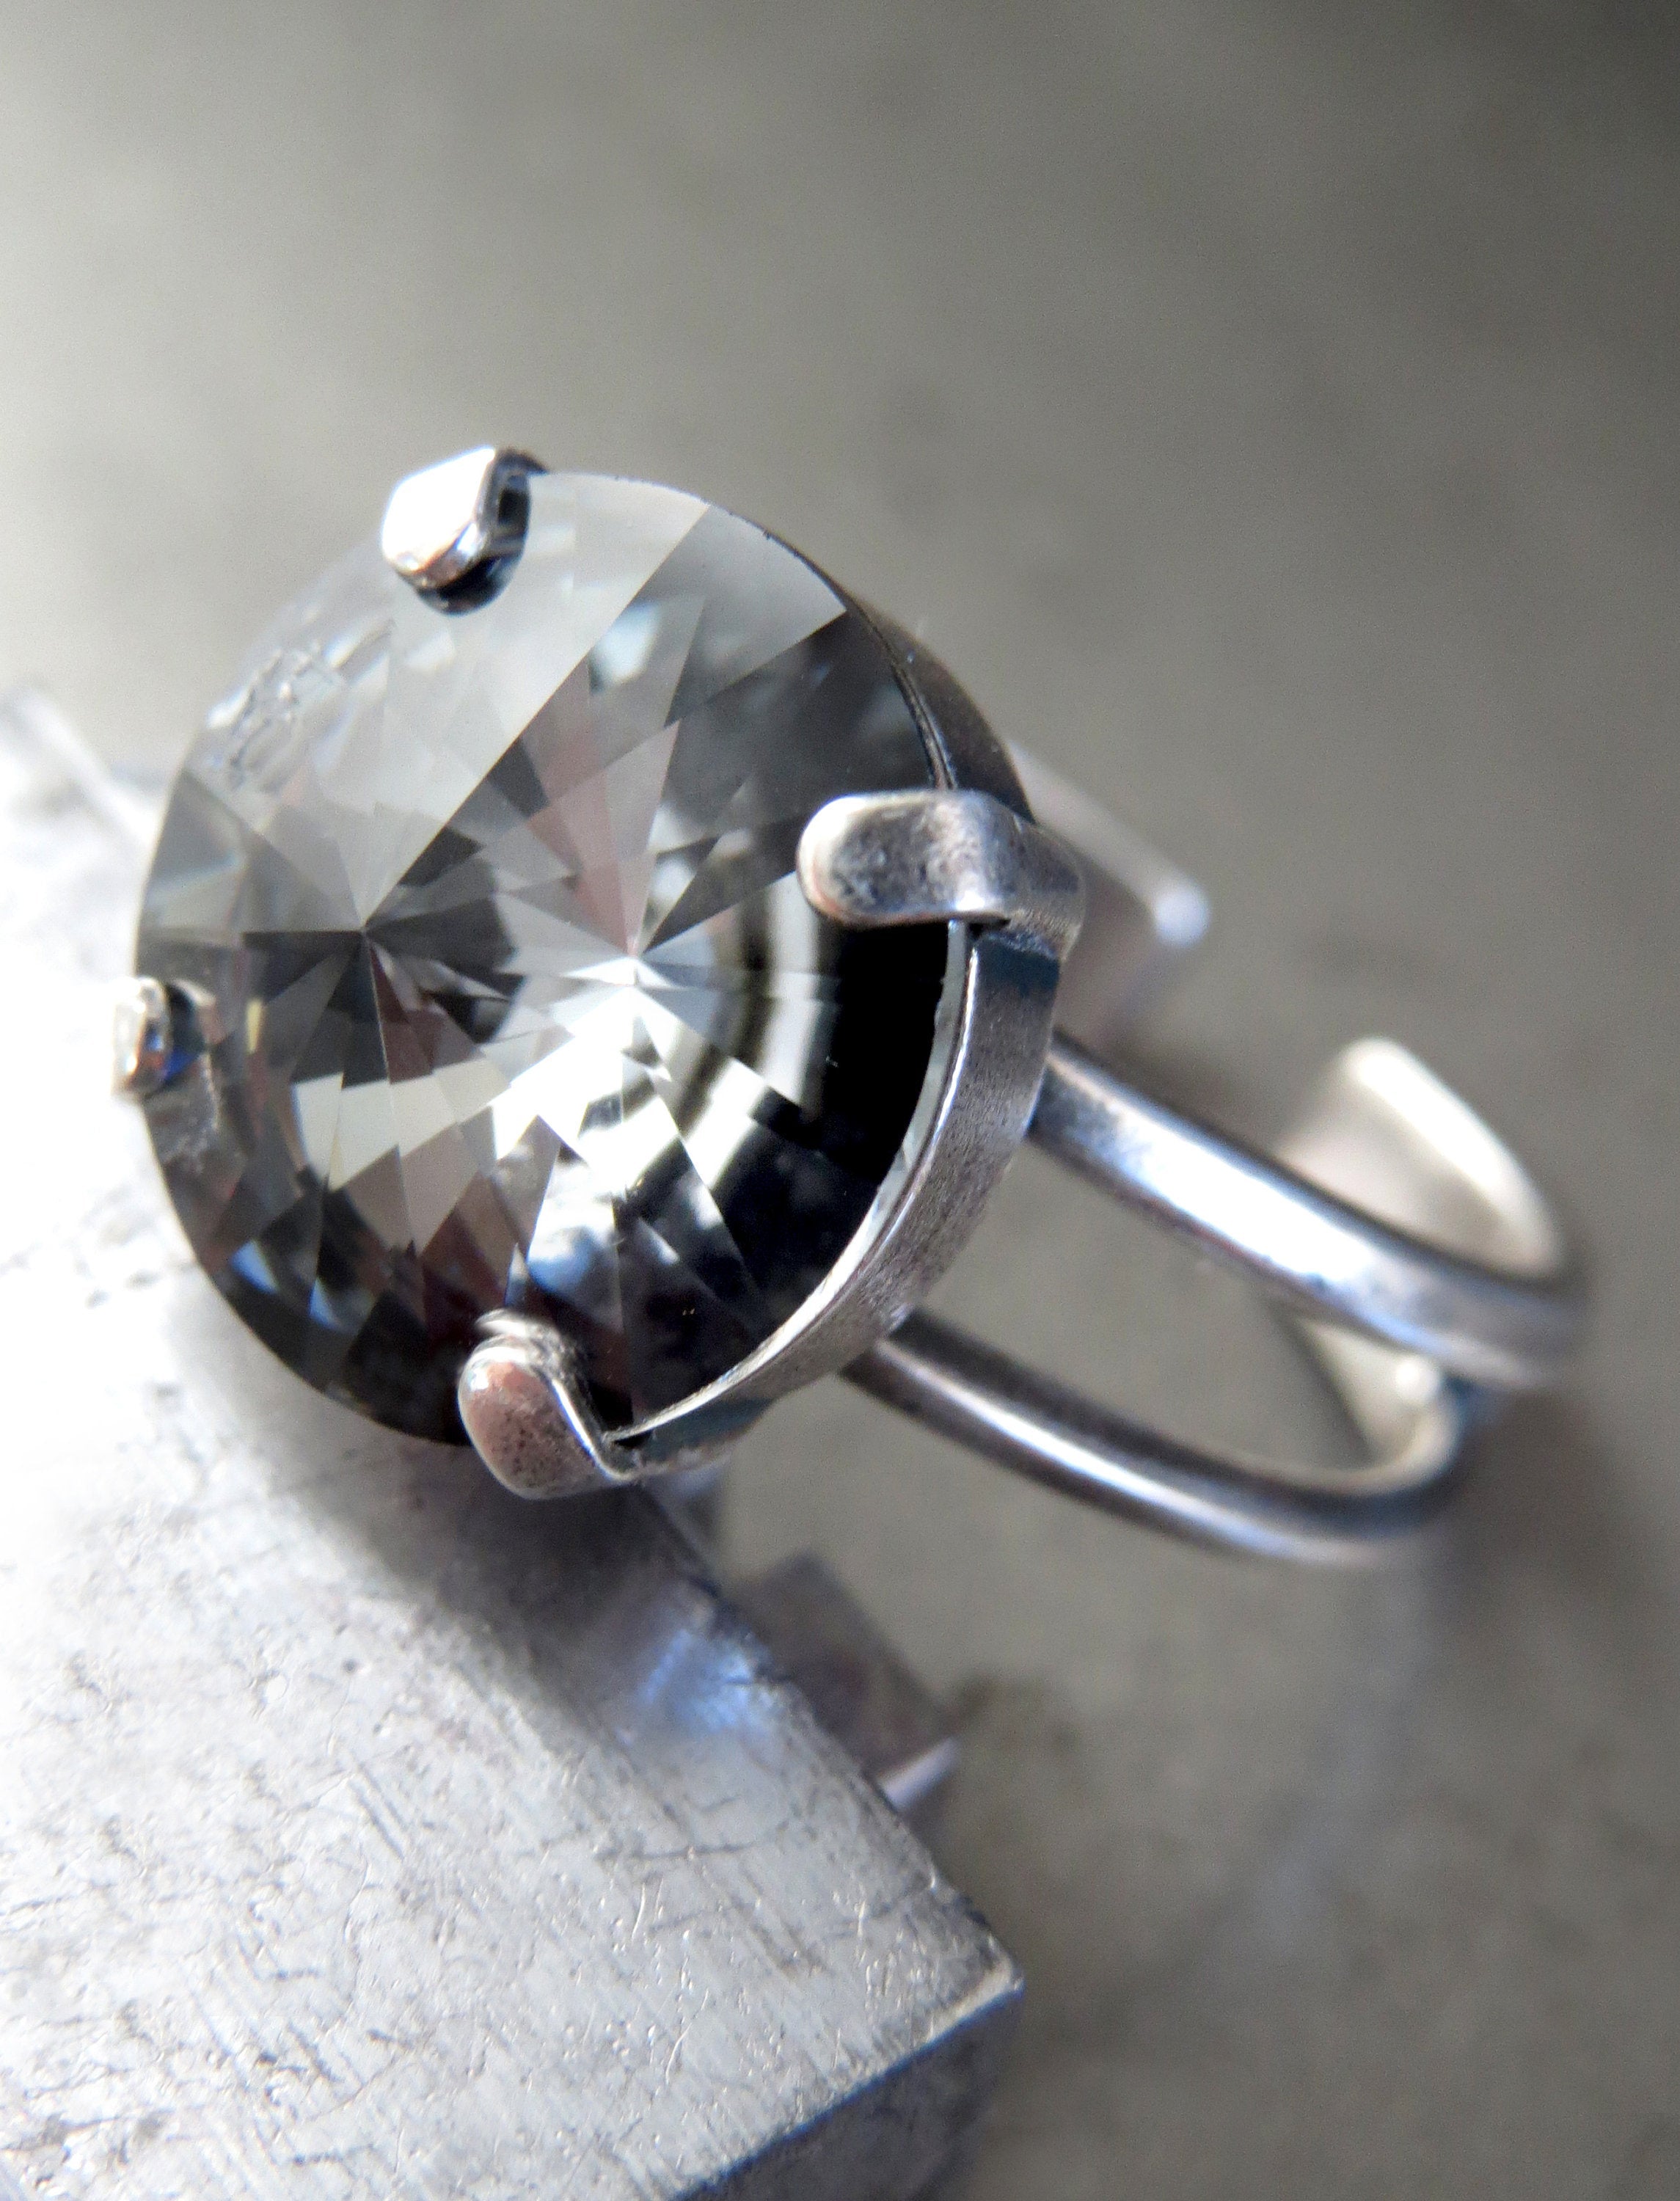 Small Round Swarovski Crystal Ring in Black Night - Dark Charcoal Grey - Antiqued Silver Adjustable Ring Band - Modern Minimalist Jewelry